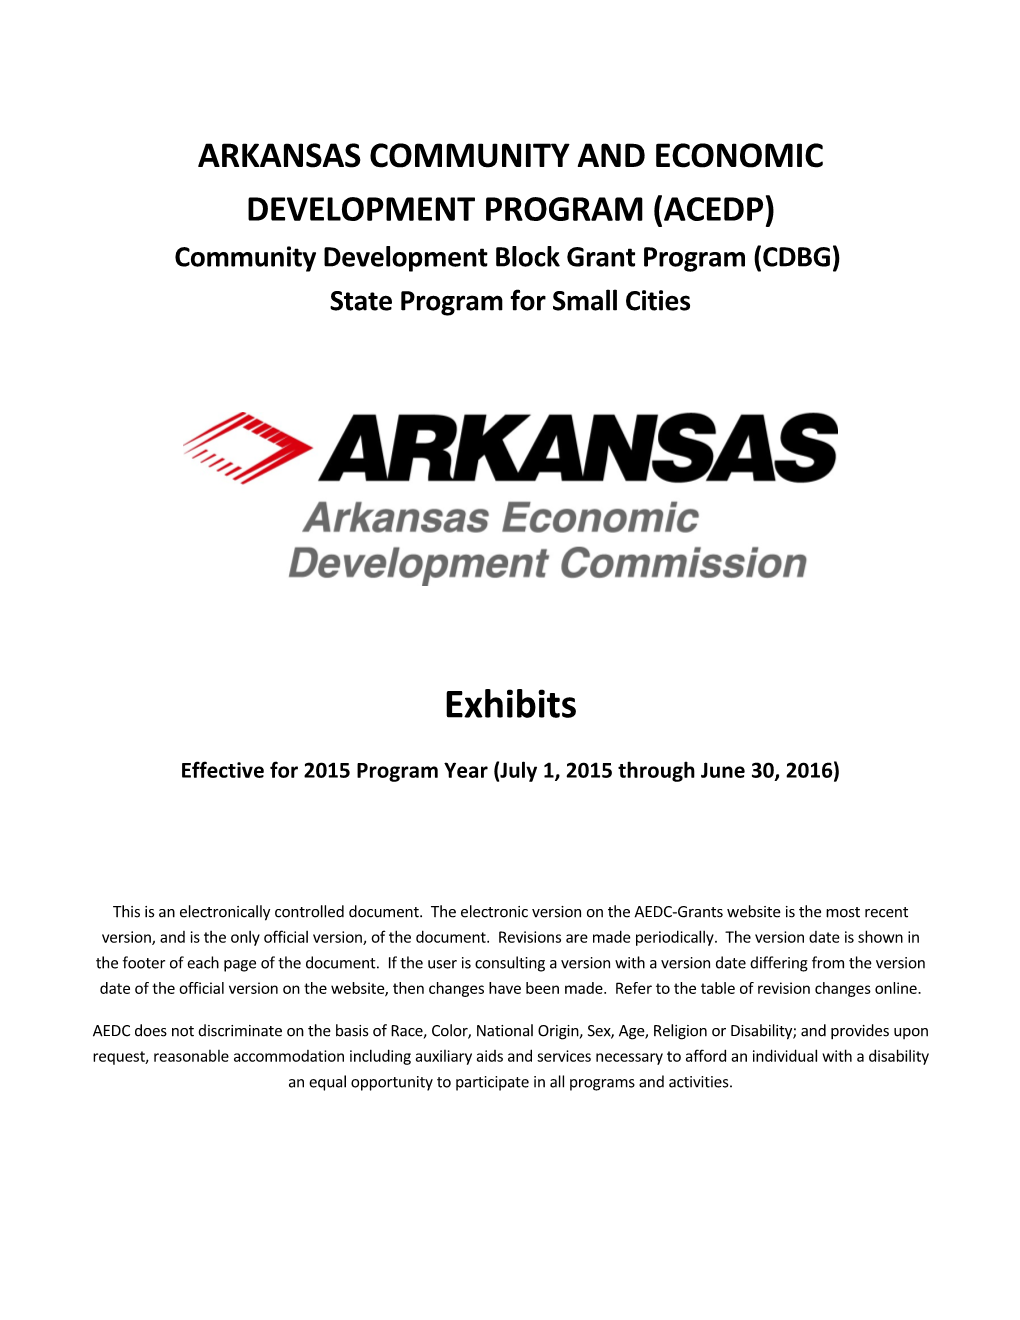 ARKANSAS COMMUNITY and ECONOMIC DEVELOPMENT PROGRAM (ACEDP) Community Development Block